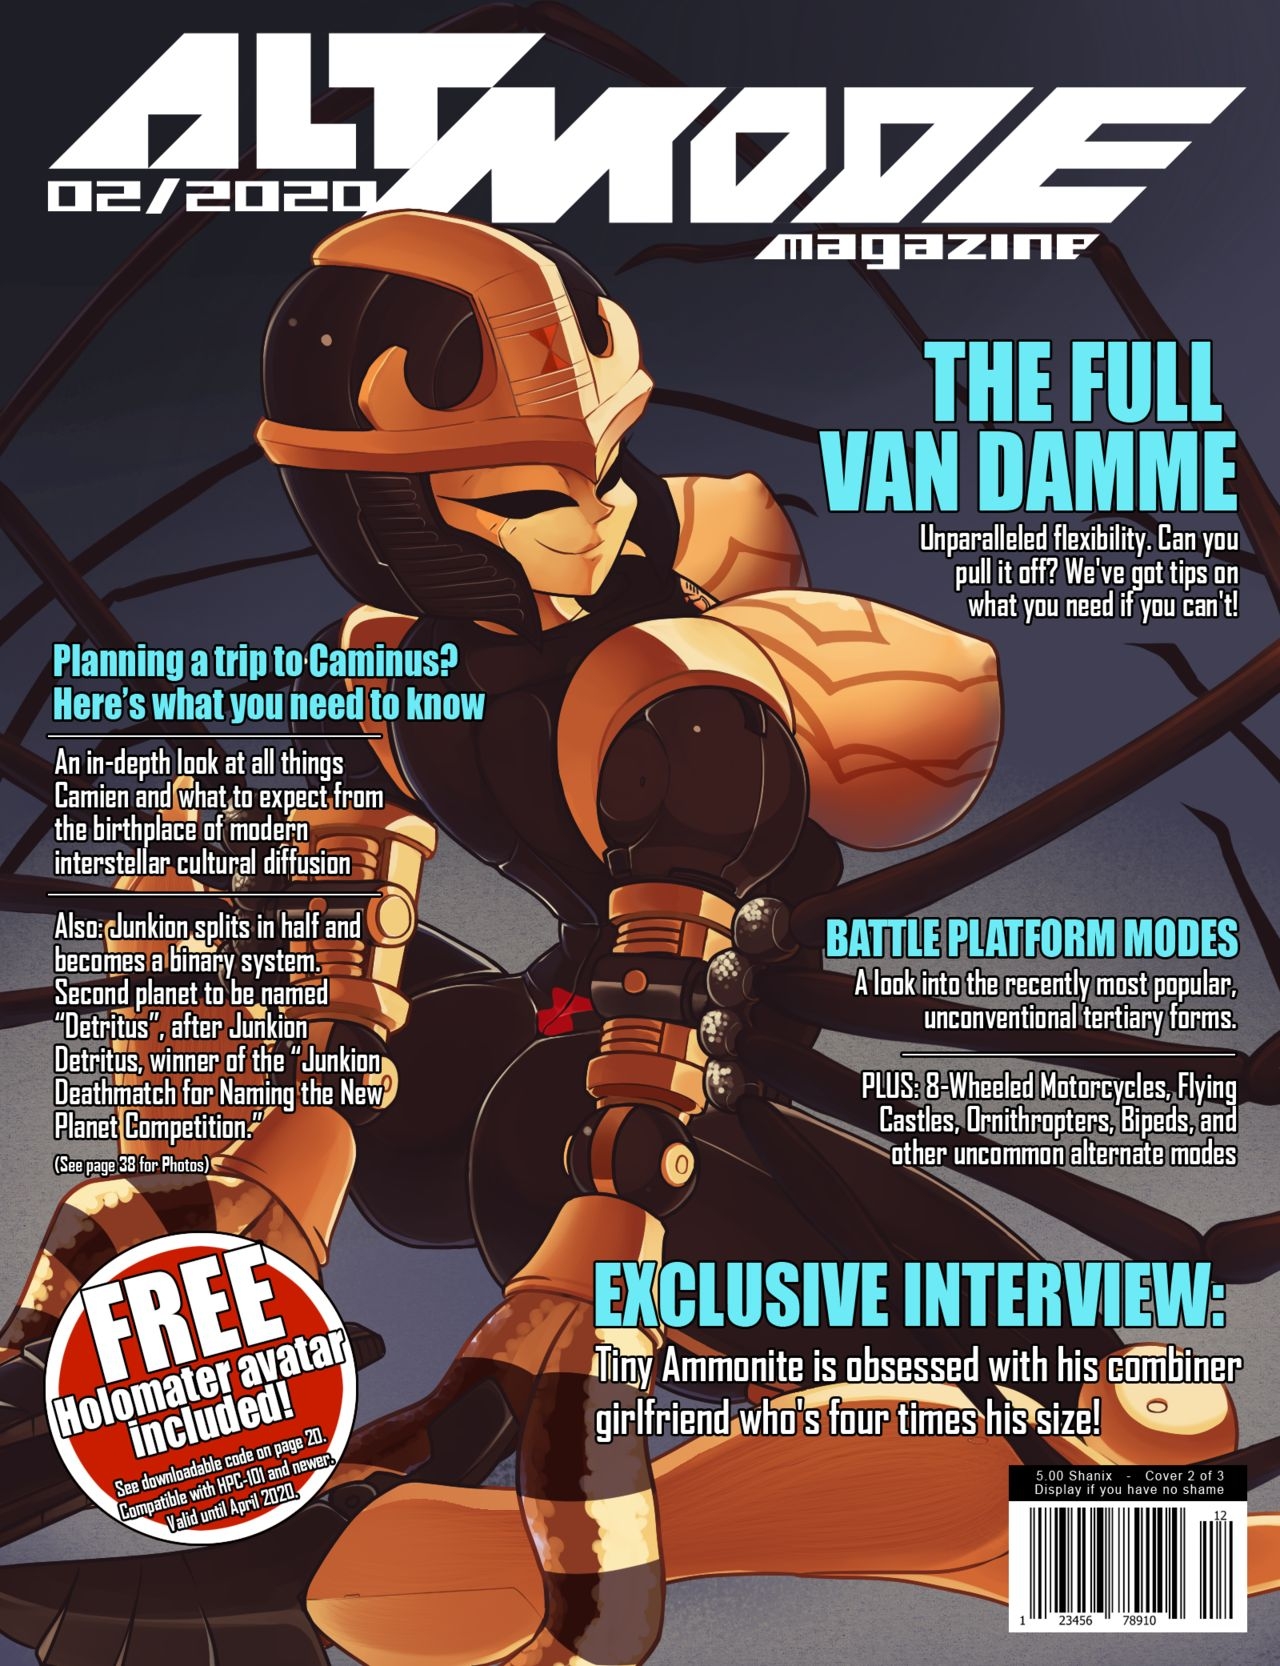 [SquareoftheLightOnes] ALTMODE Feb. 2020 Issue (Transformers) 1